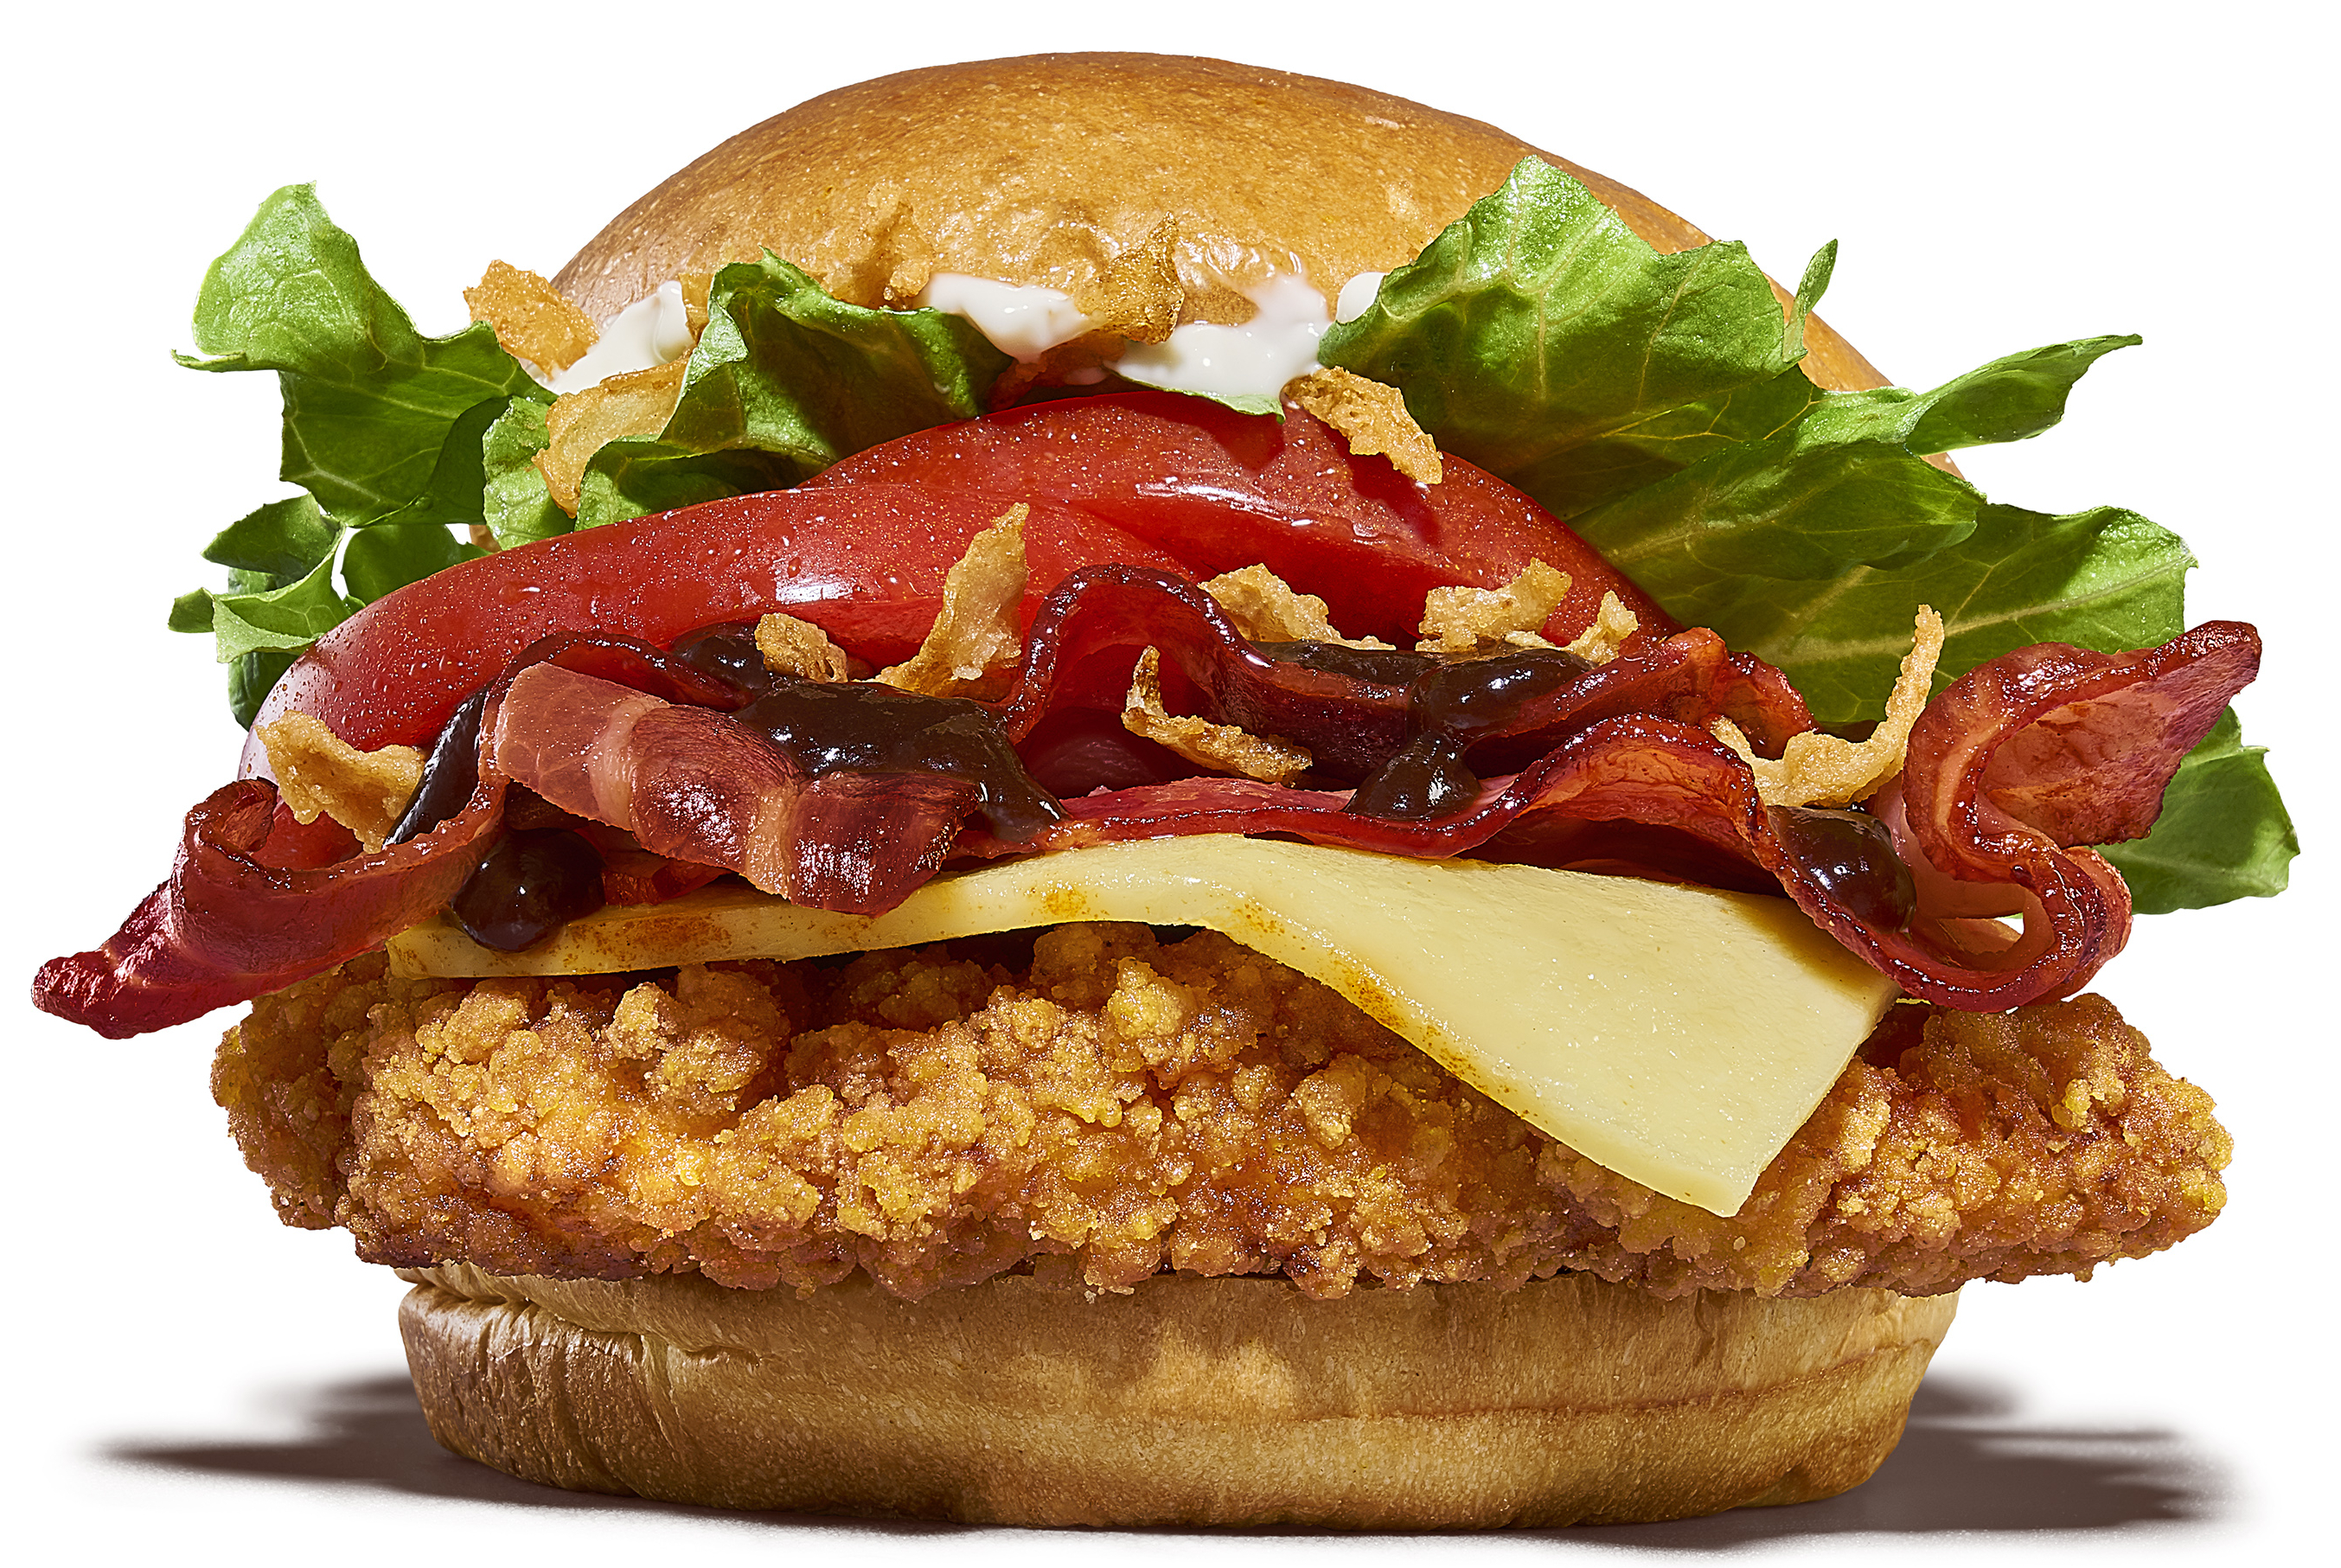 Burger King lança BK Cheddar - Hambúrguer Perfeito